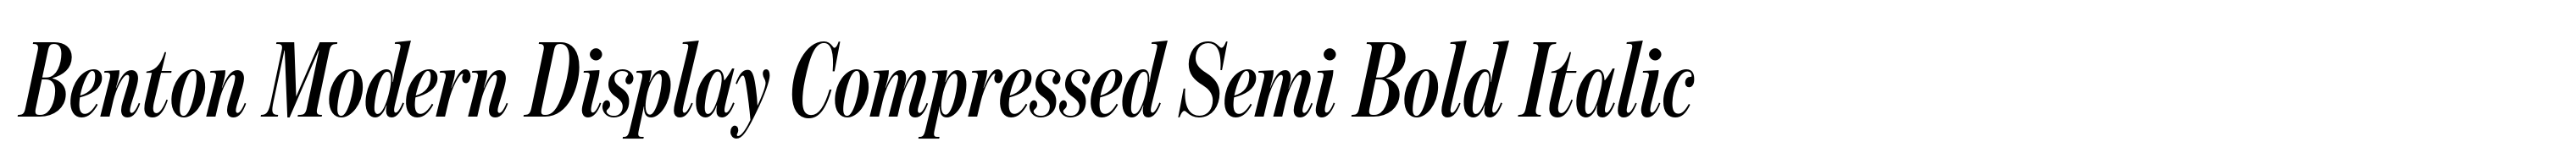 Benton Modern Display Compressed Semi Bold Italic